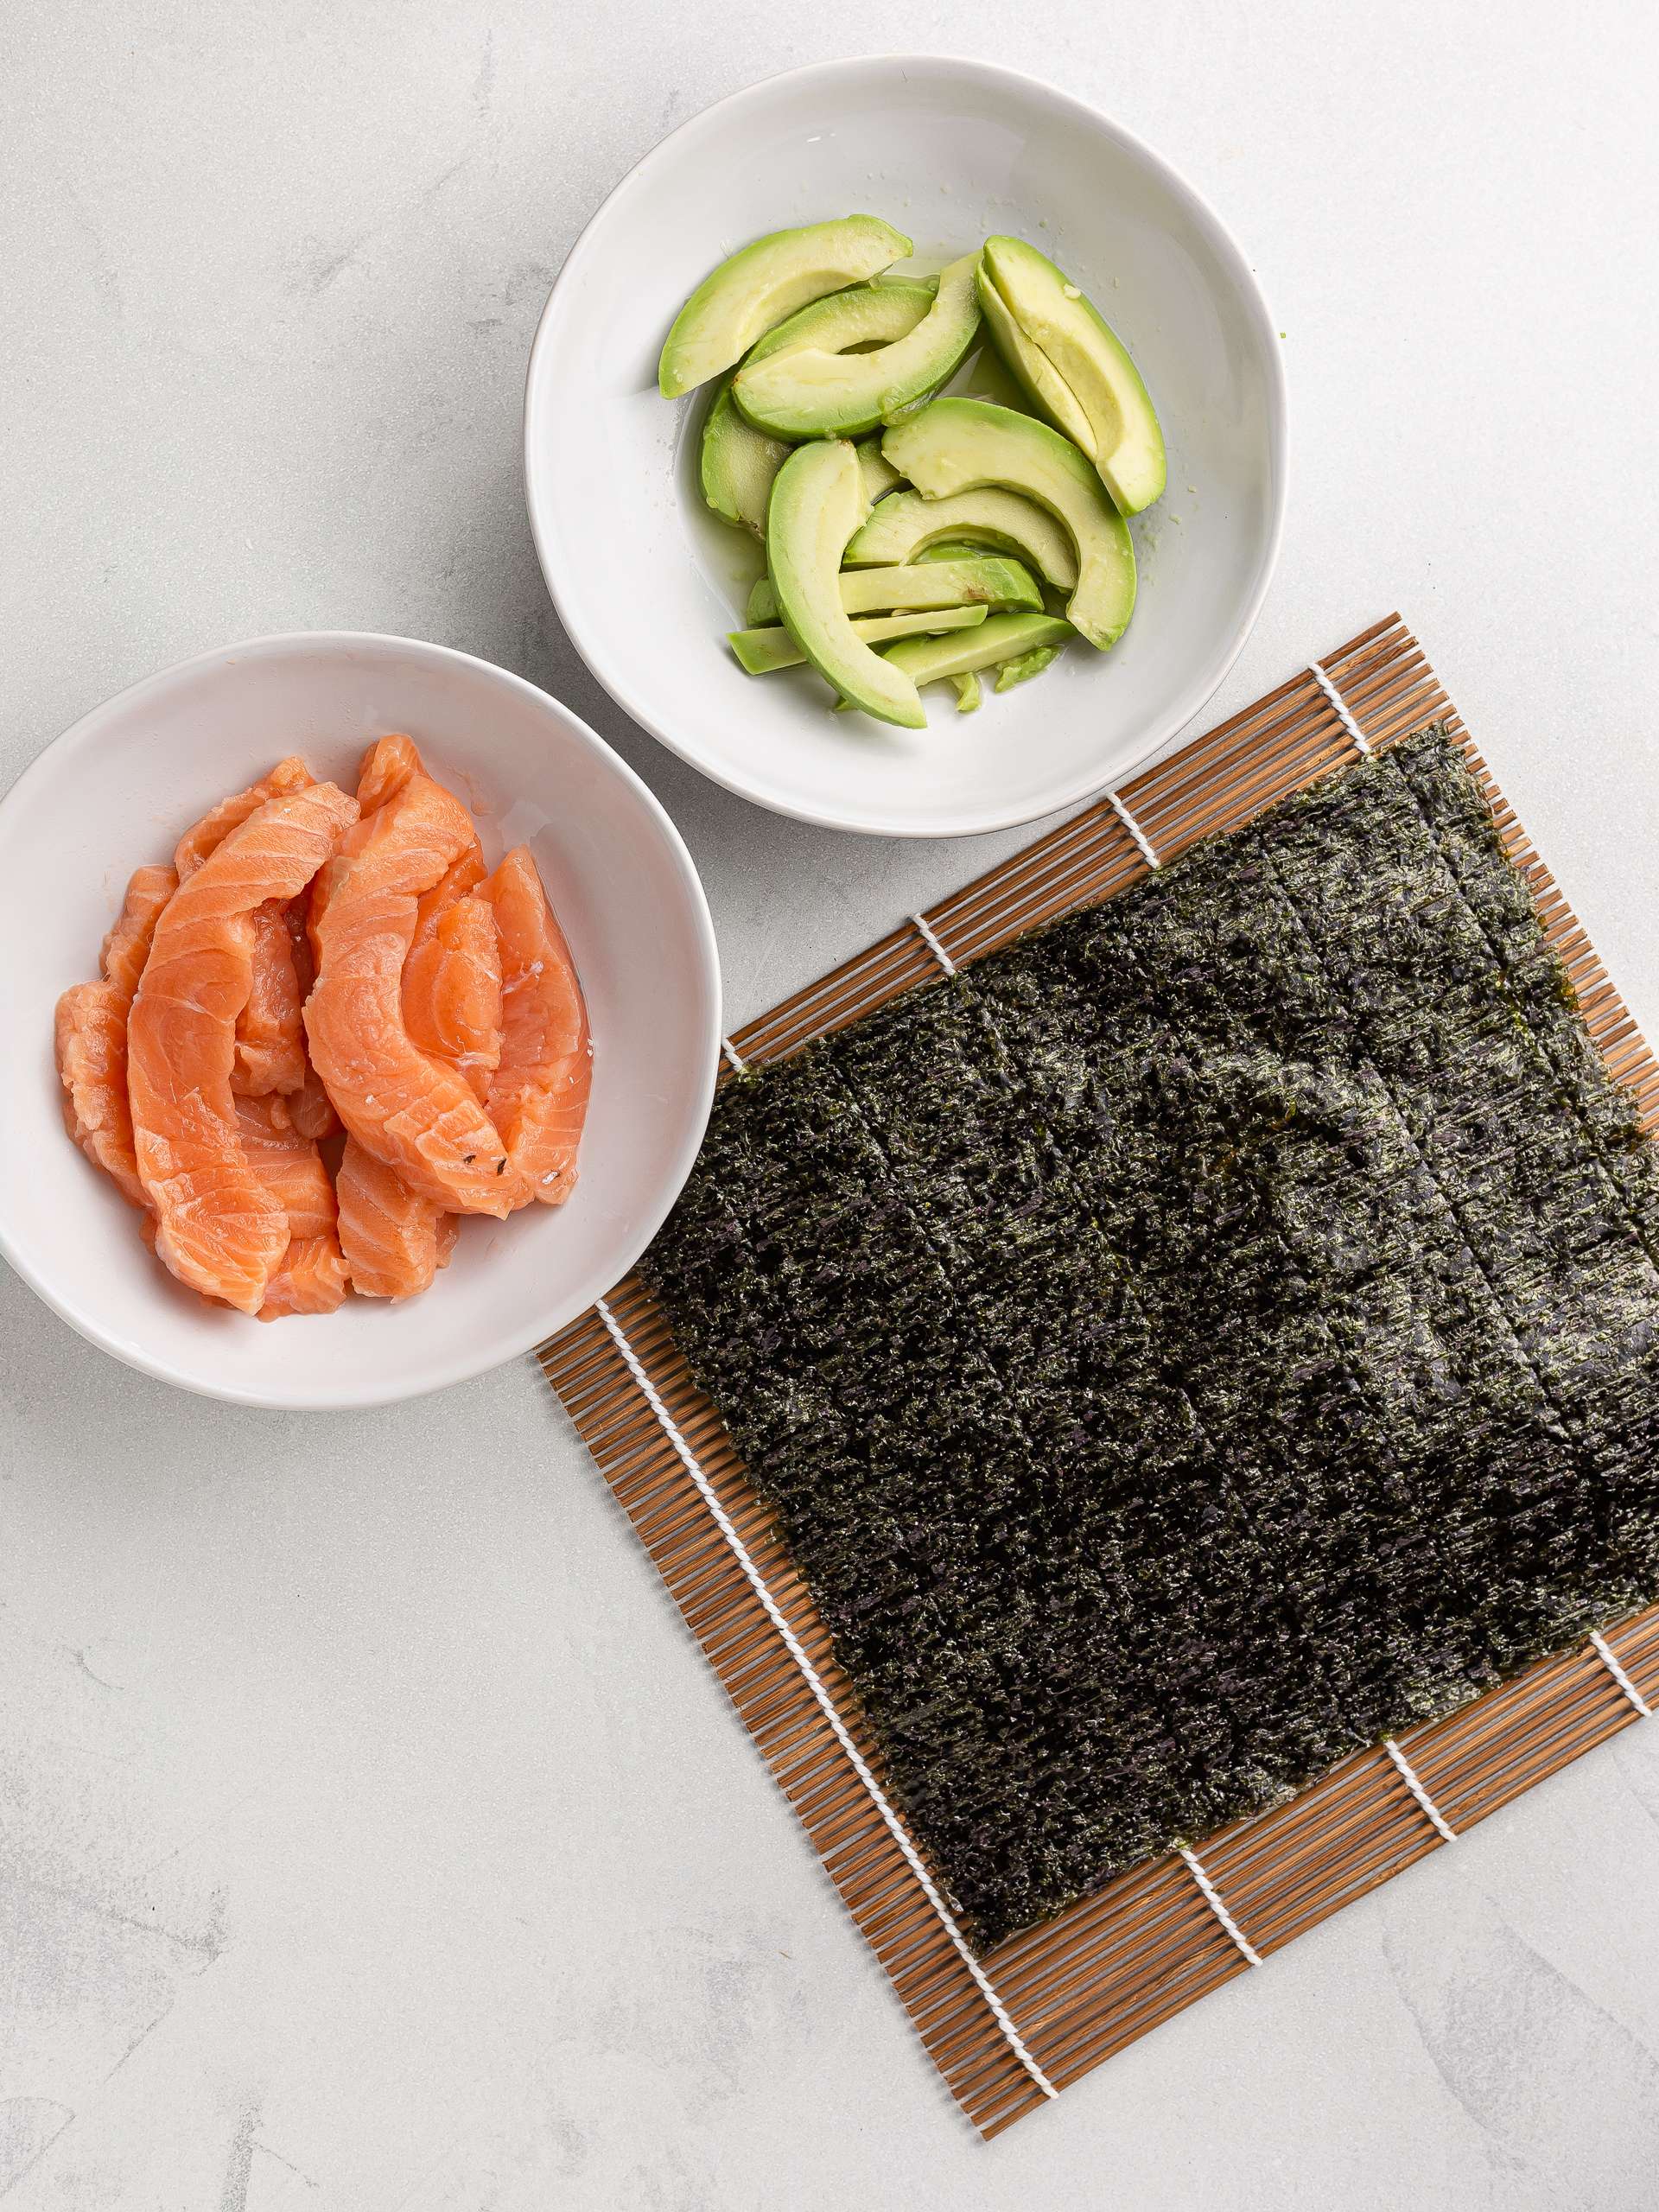 salmon, avocado and nori sheet for sushi